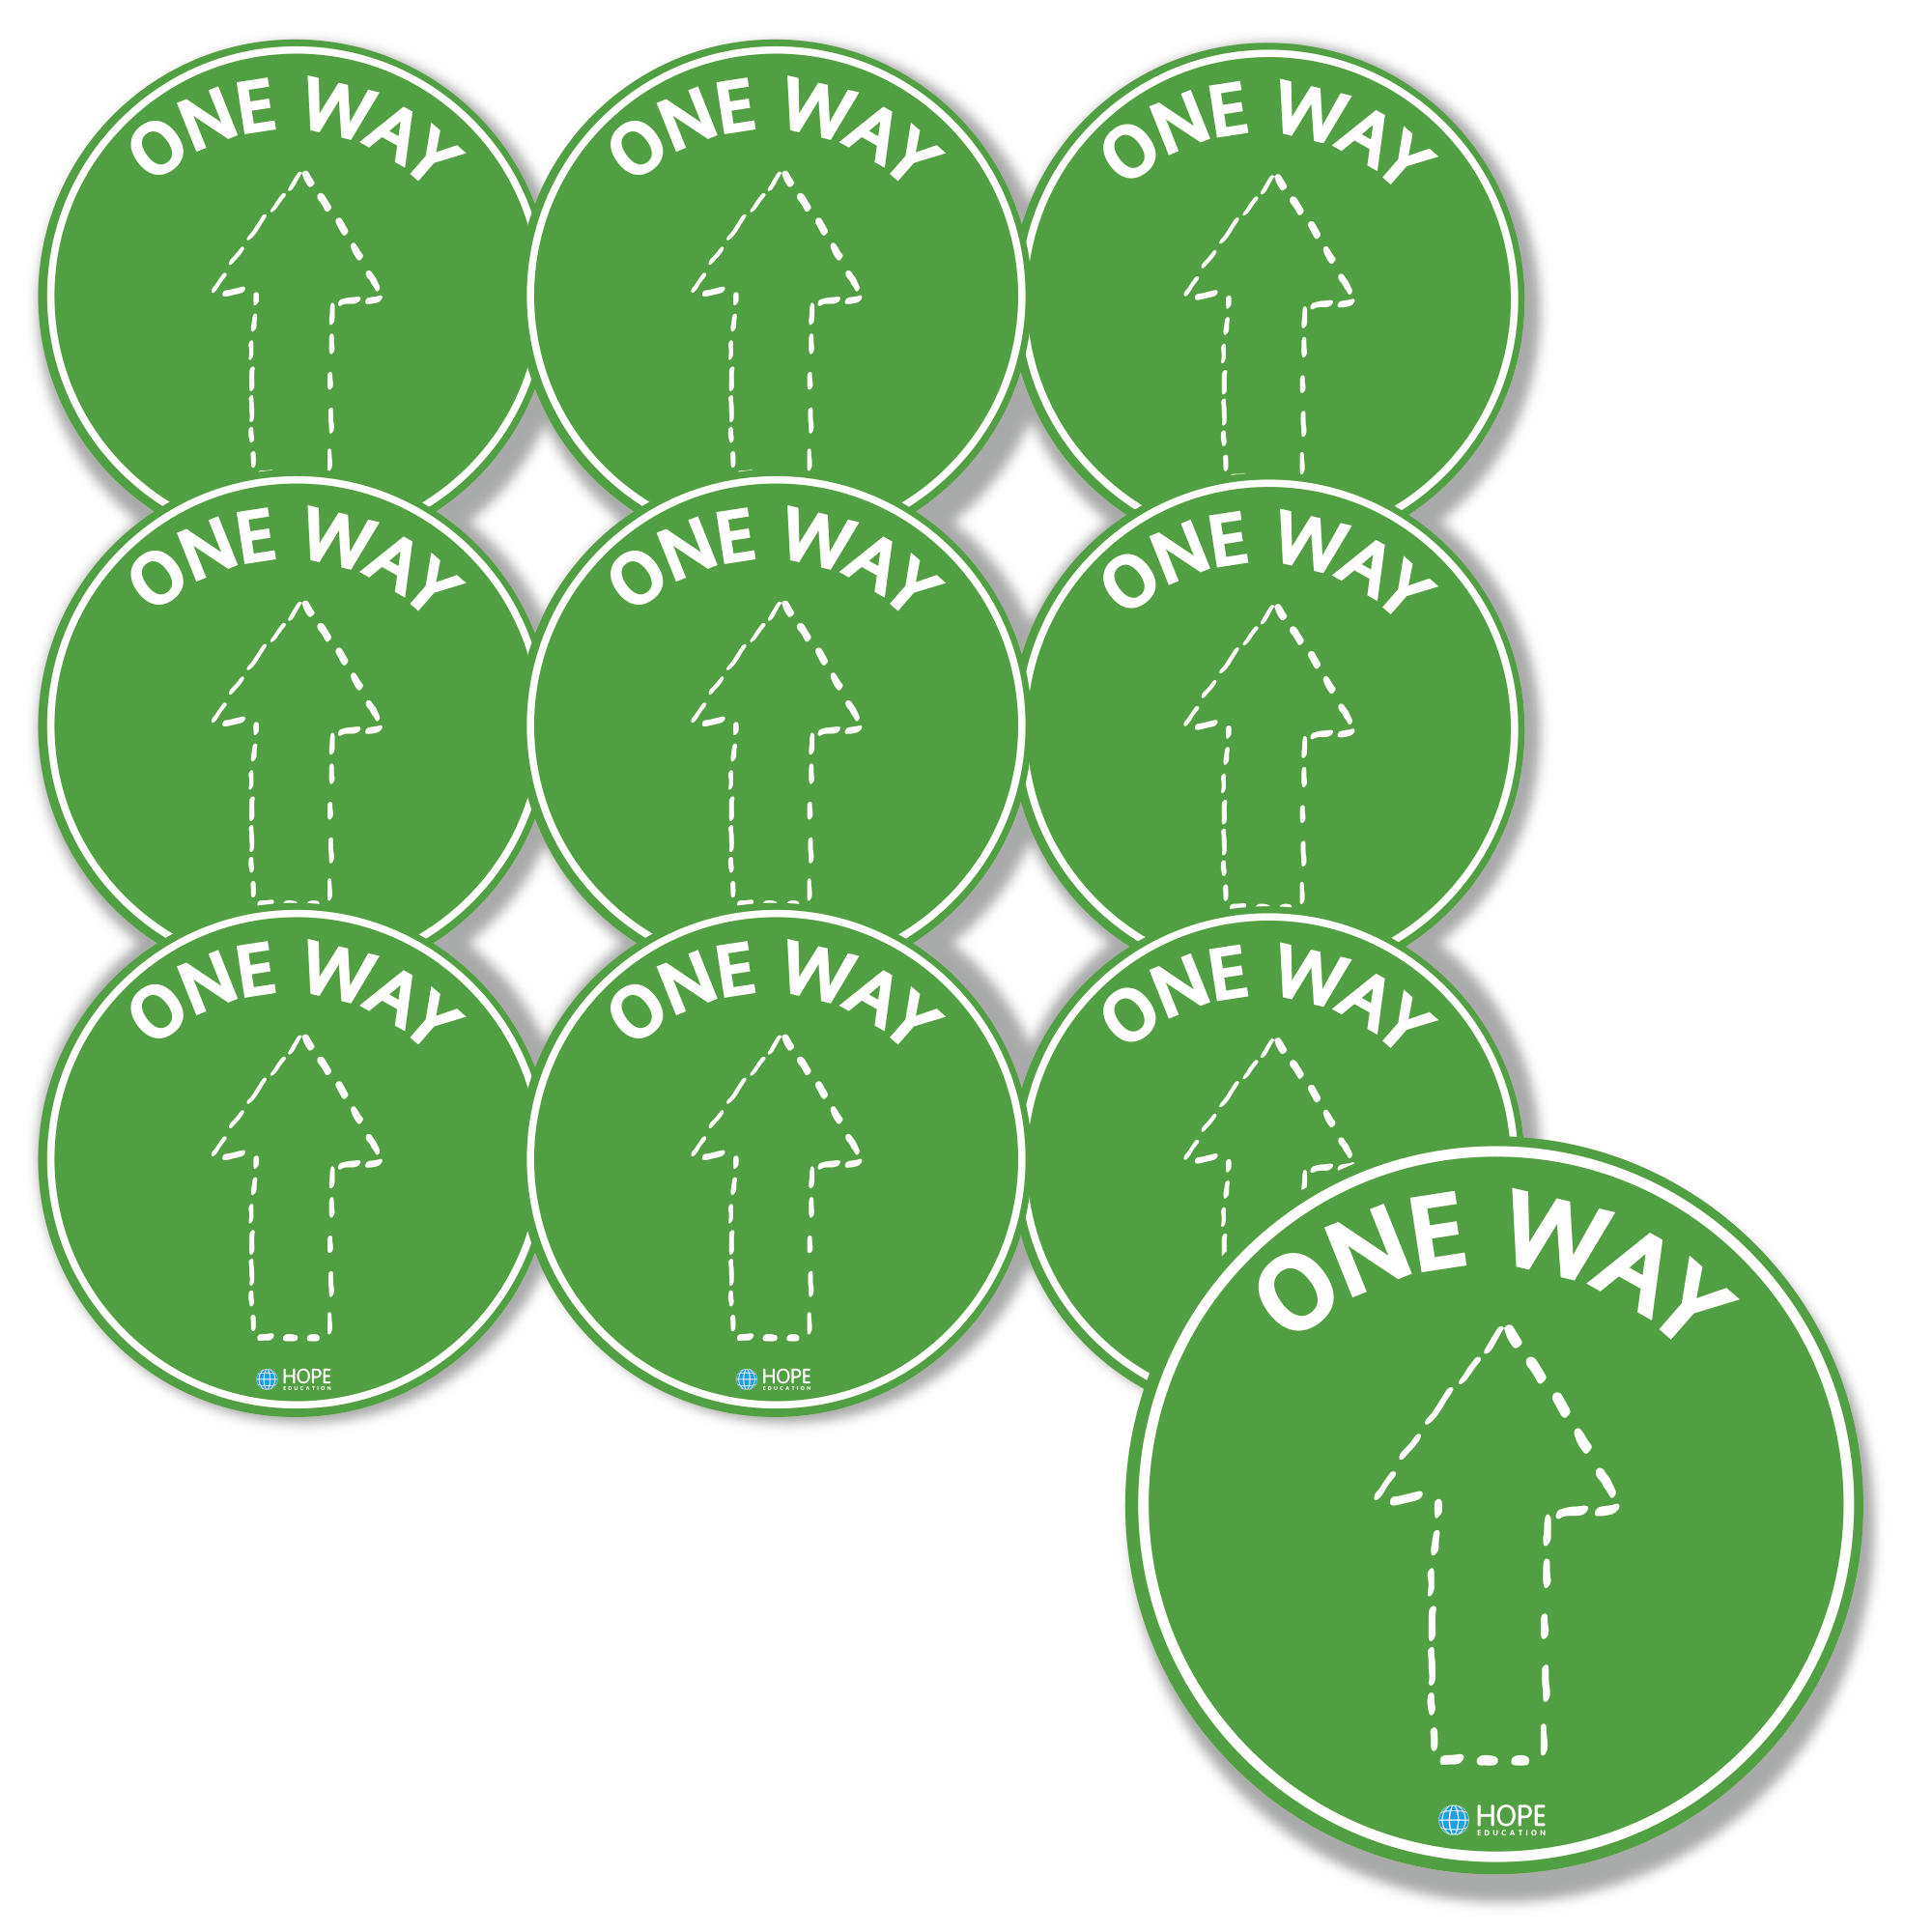 One Way Floor Stickers - Pack Of 10